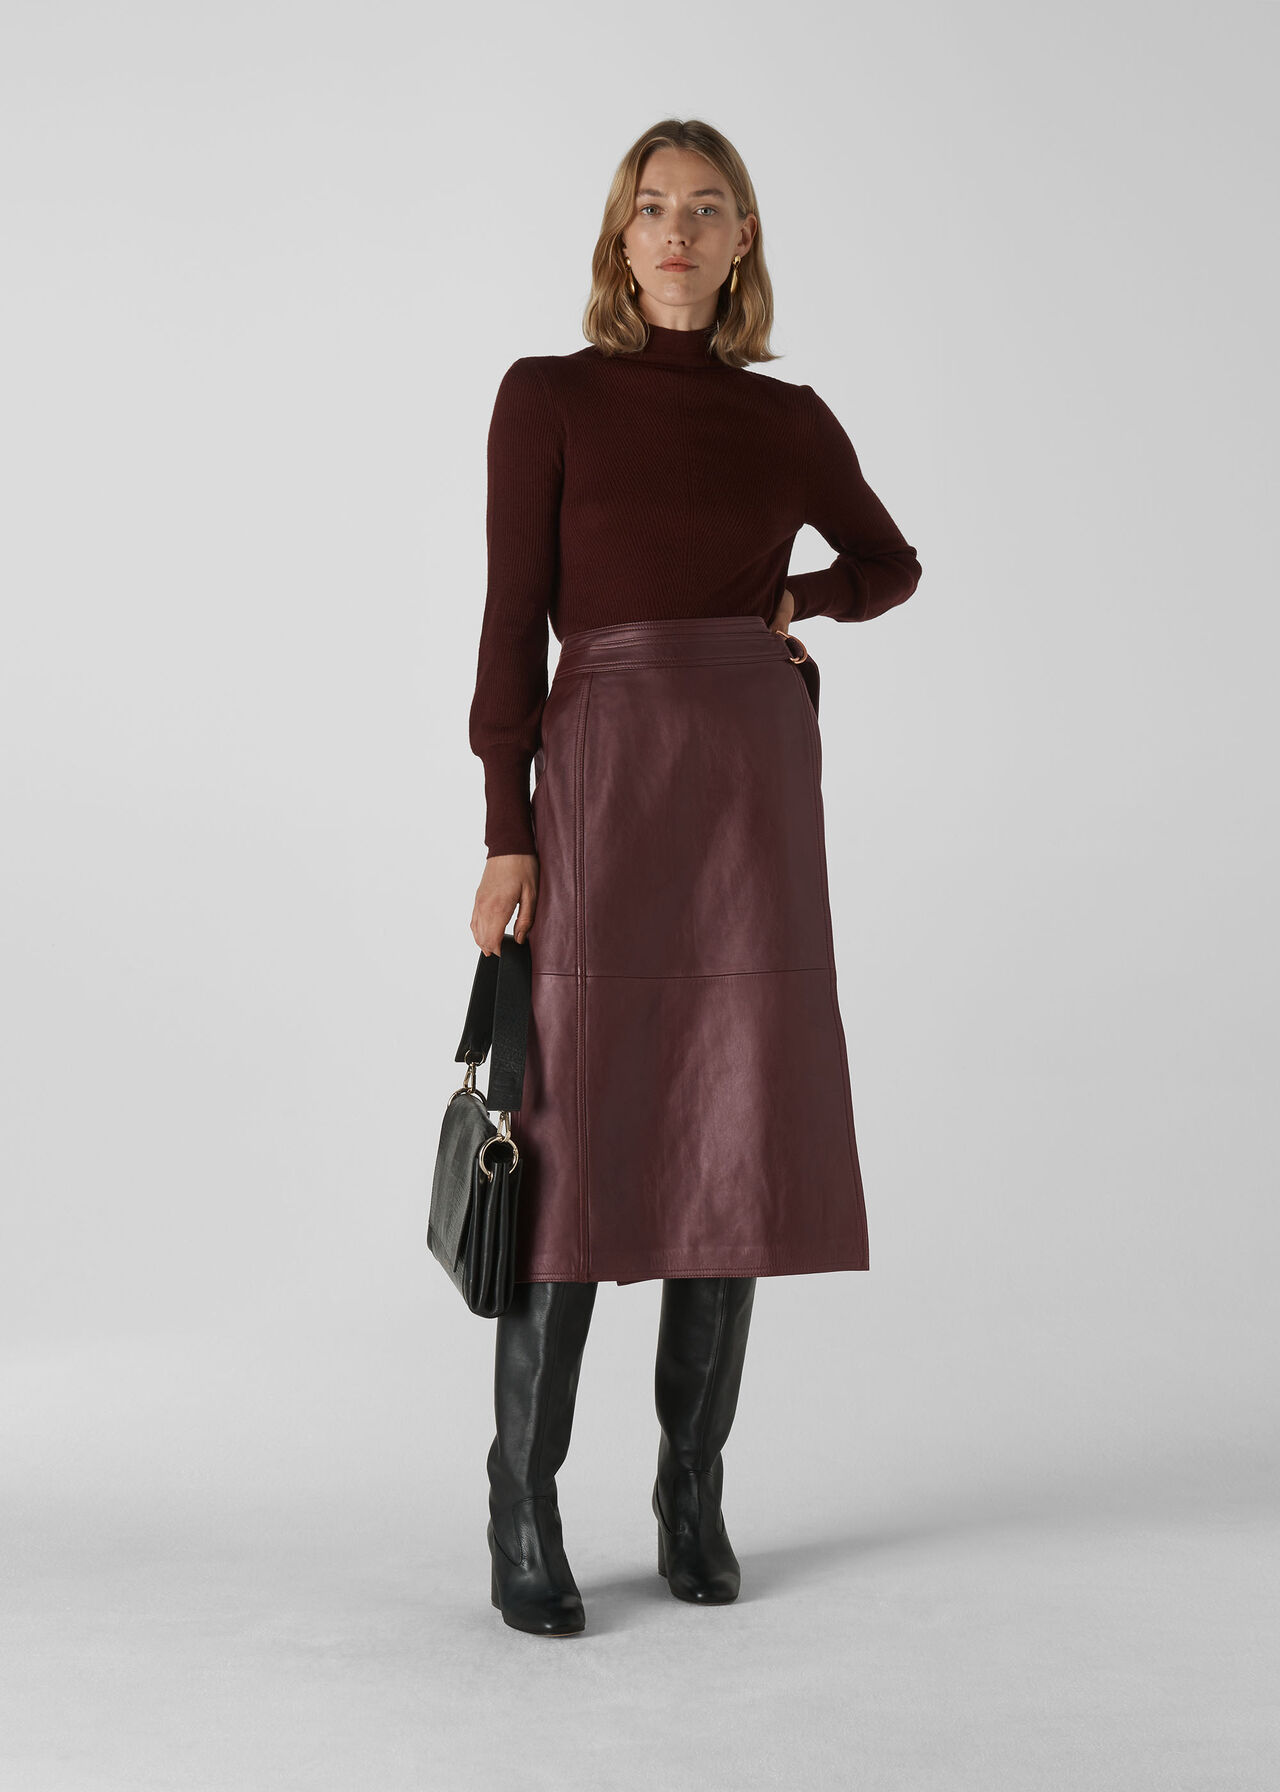 Top 74+ imagen burgundy skirt outfit - Abzlocal.mx